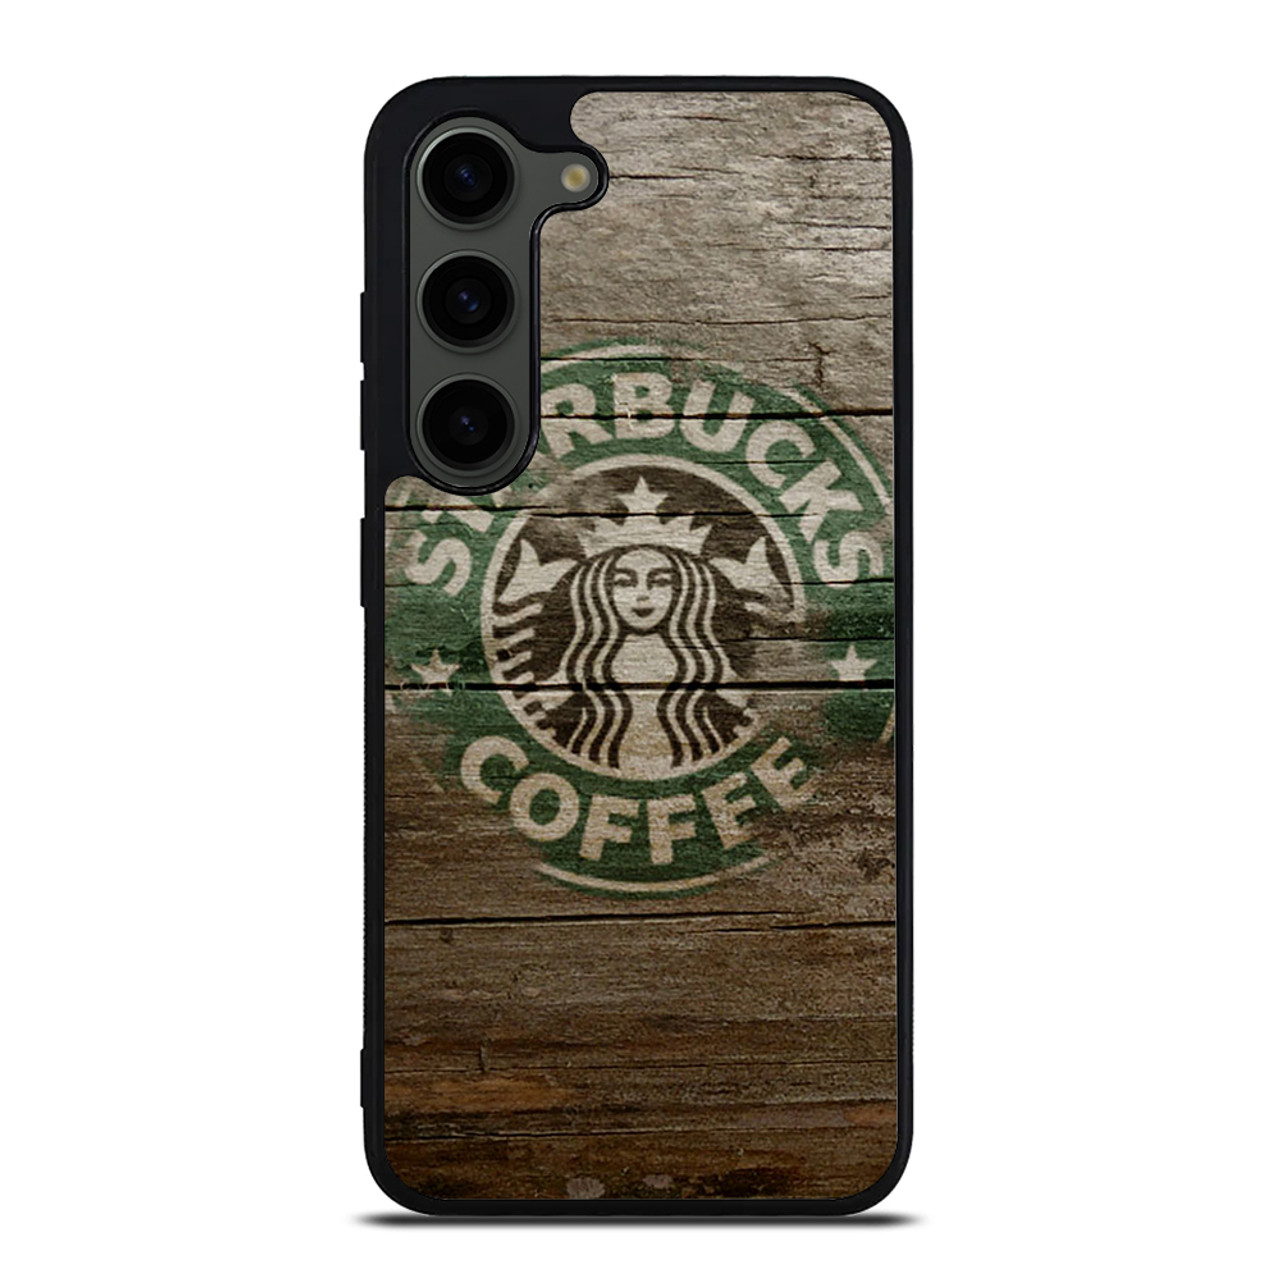 STARBUCKS COFFEE WOODEN Samsung Galaxy S23 Plus Case Cover